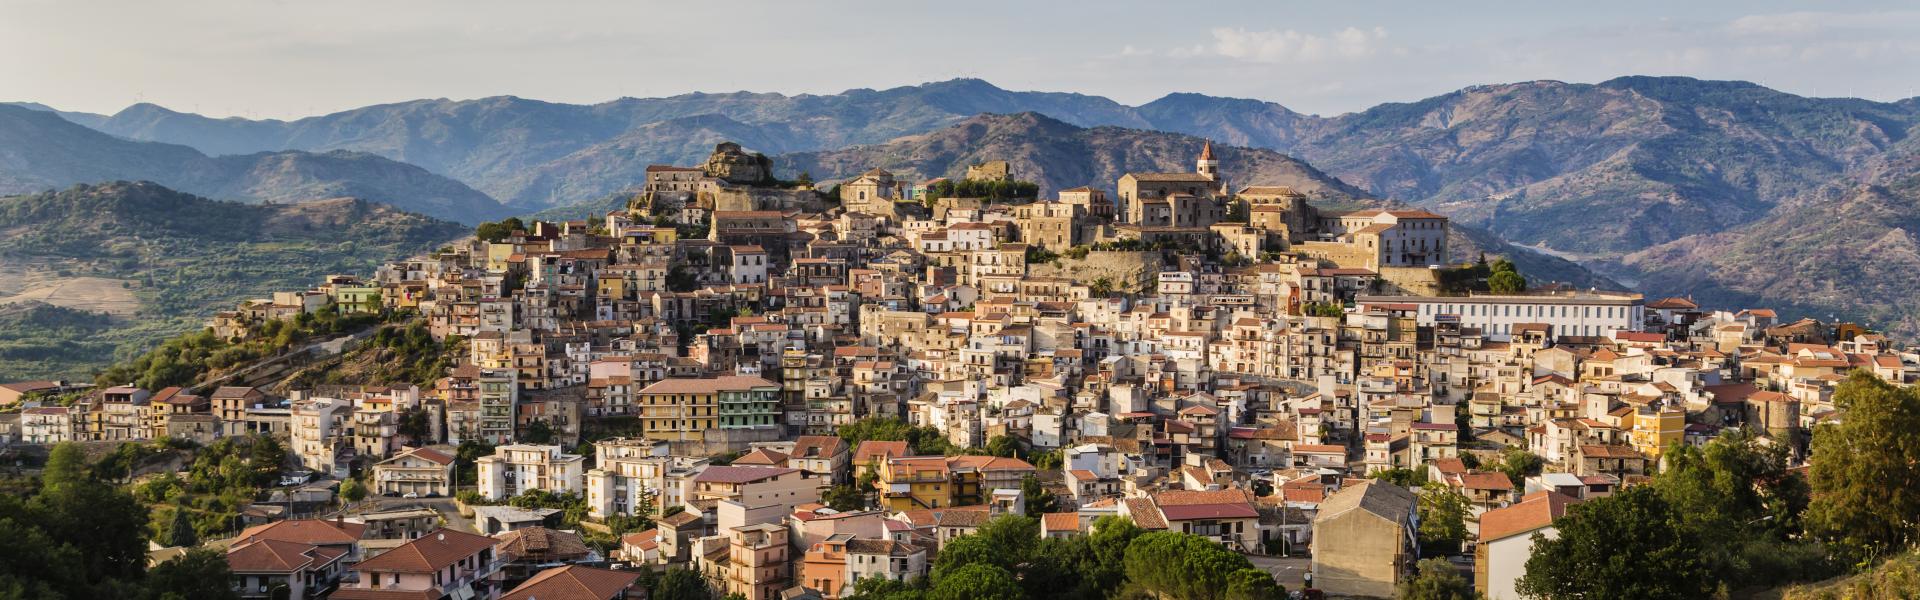 Catania Scenic View